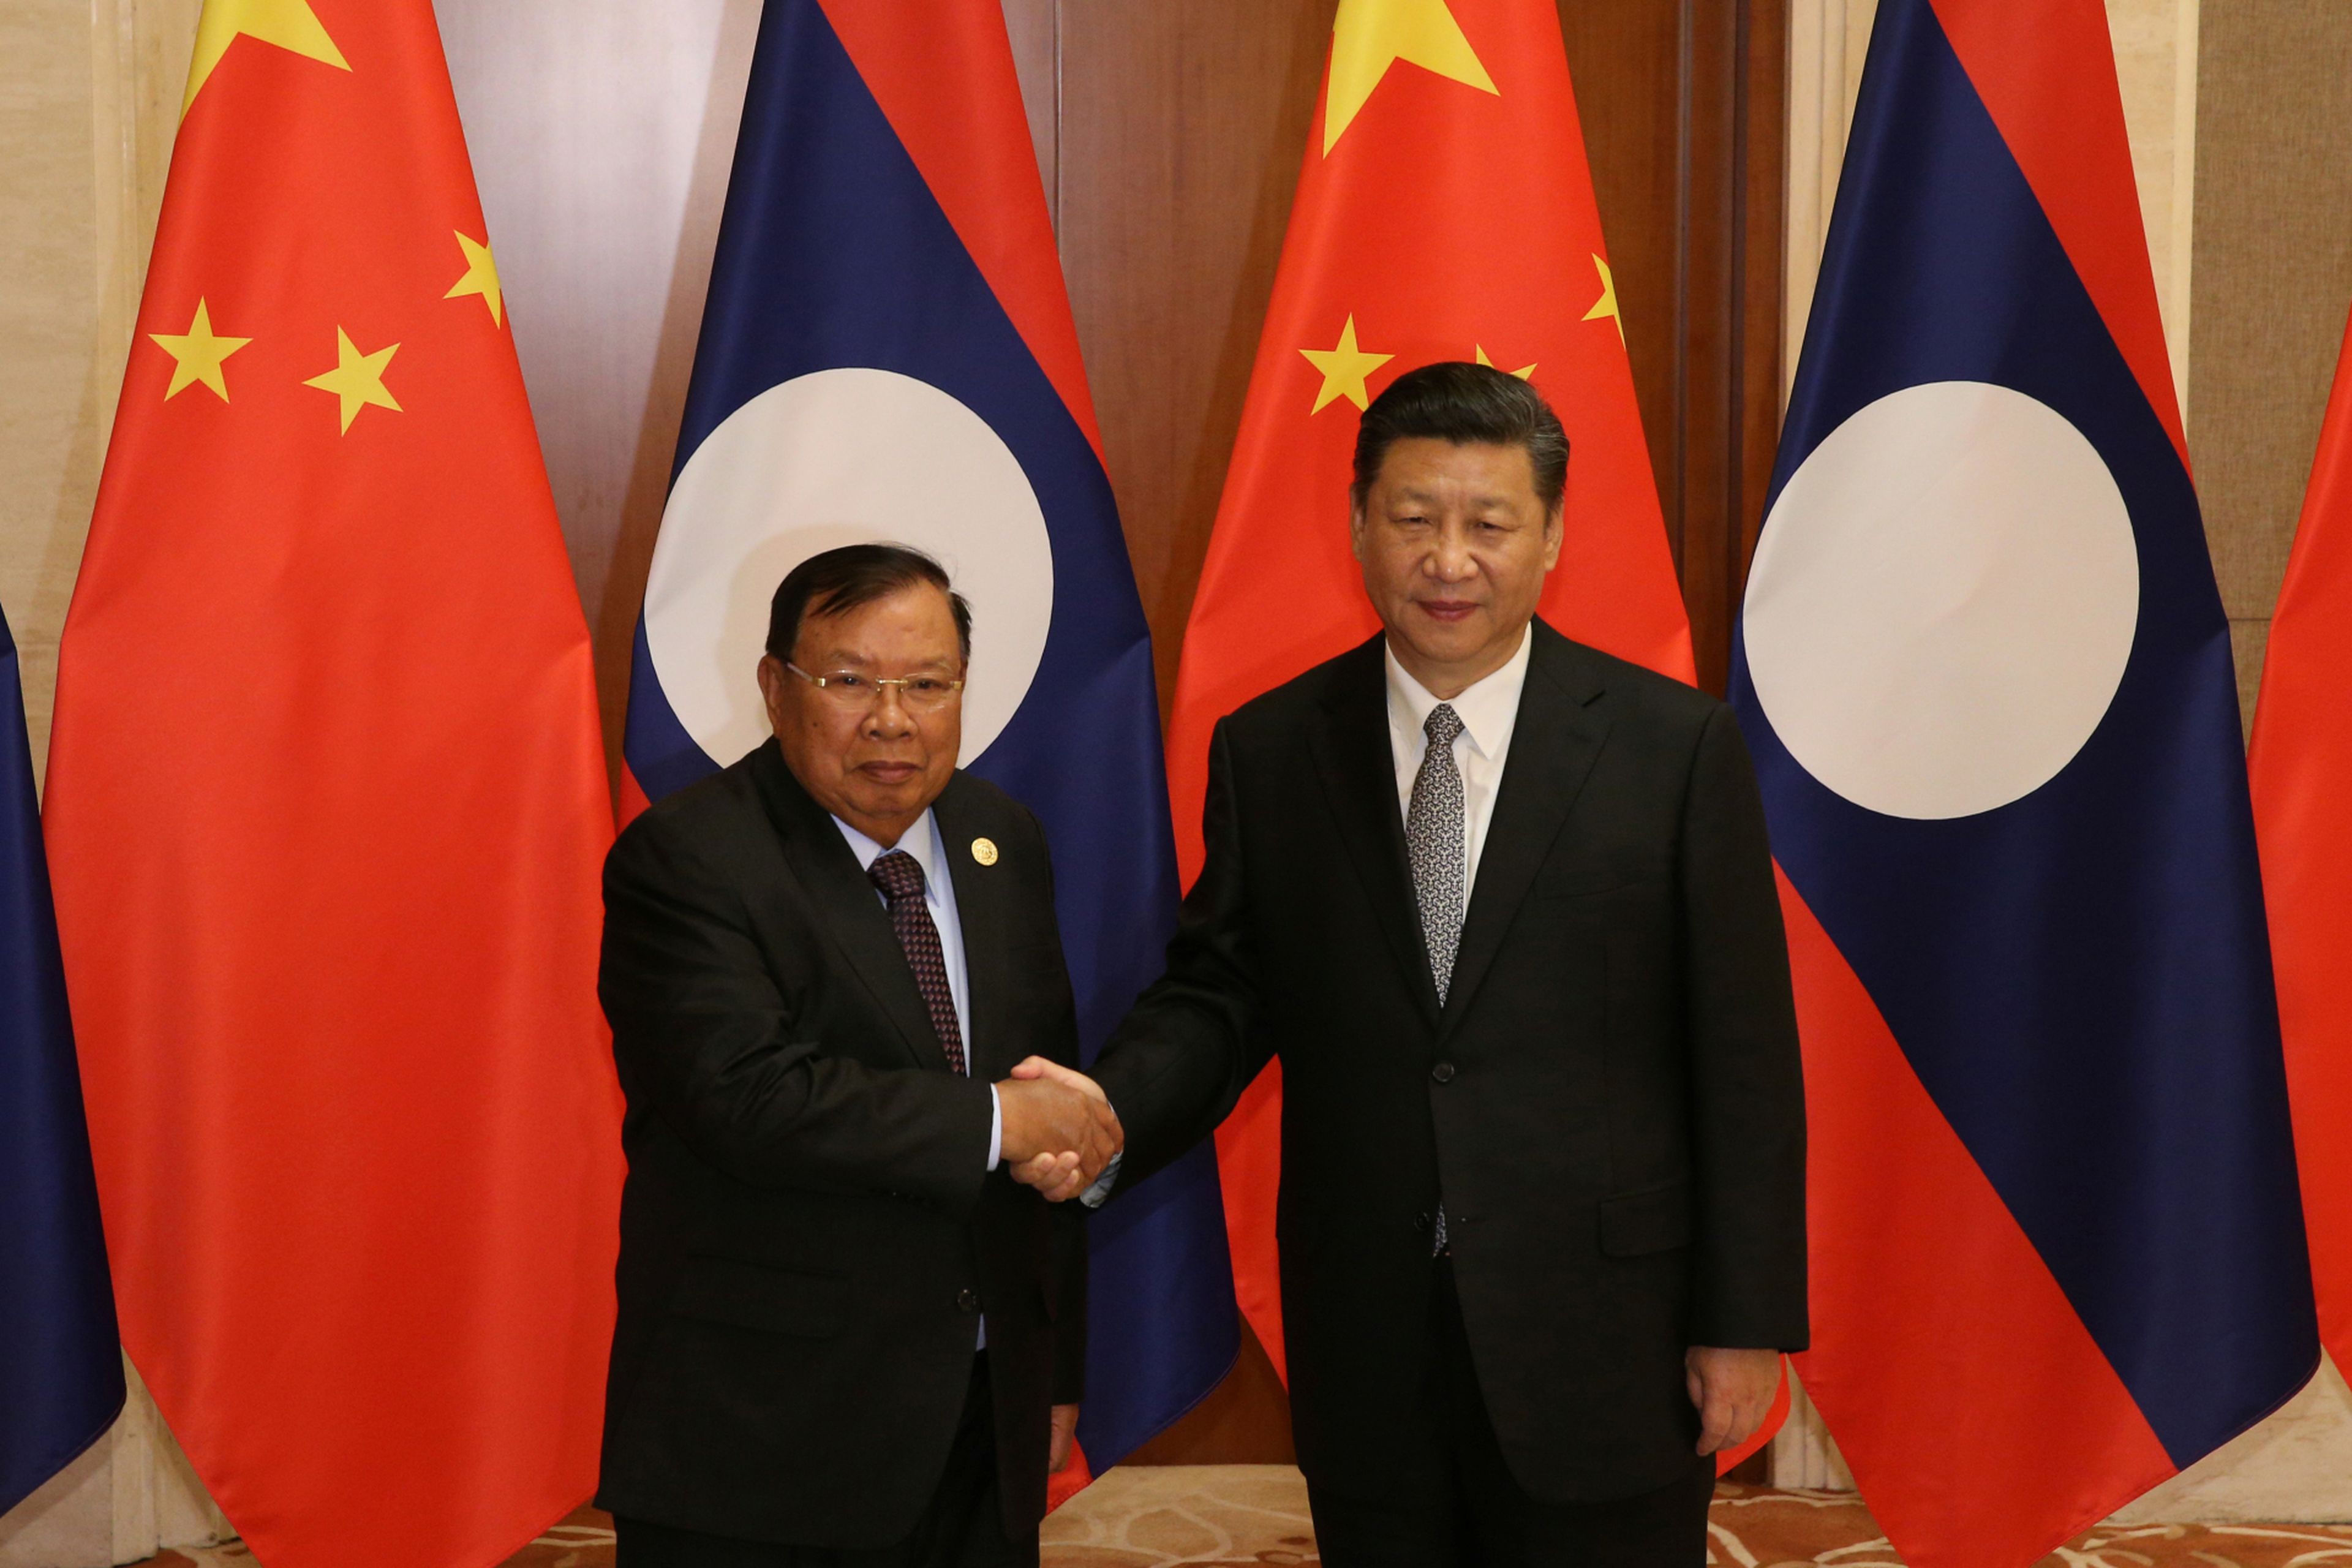 Los presidentes de Laos, Bounnhang Vorachith, y de China, Xi Jinping